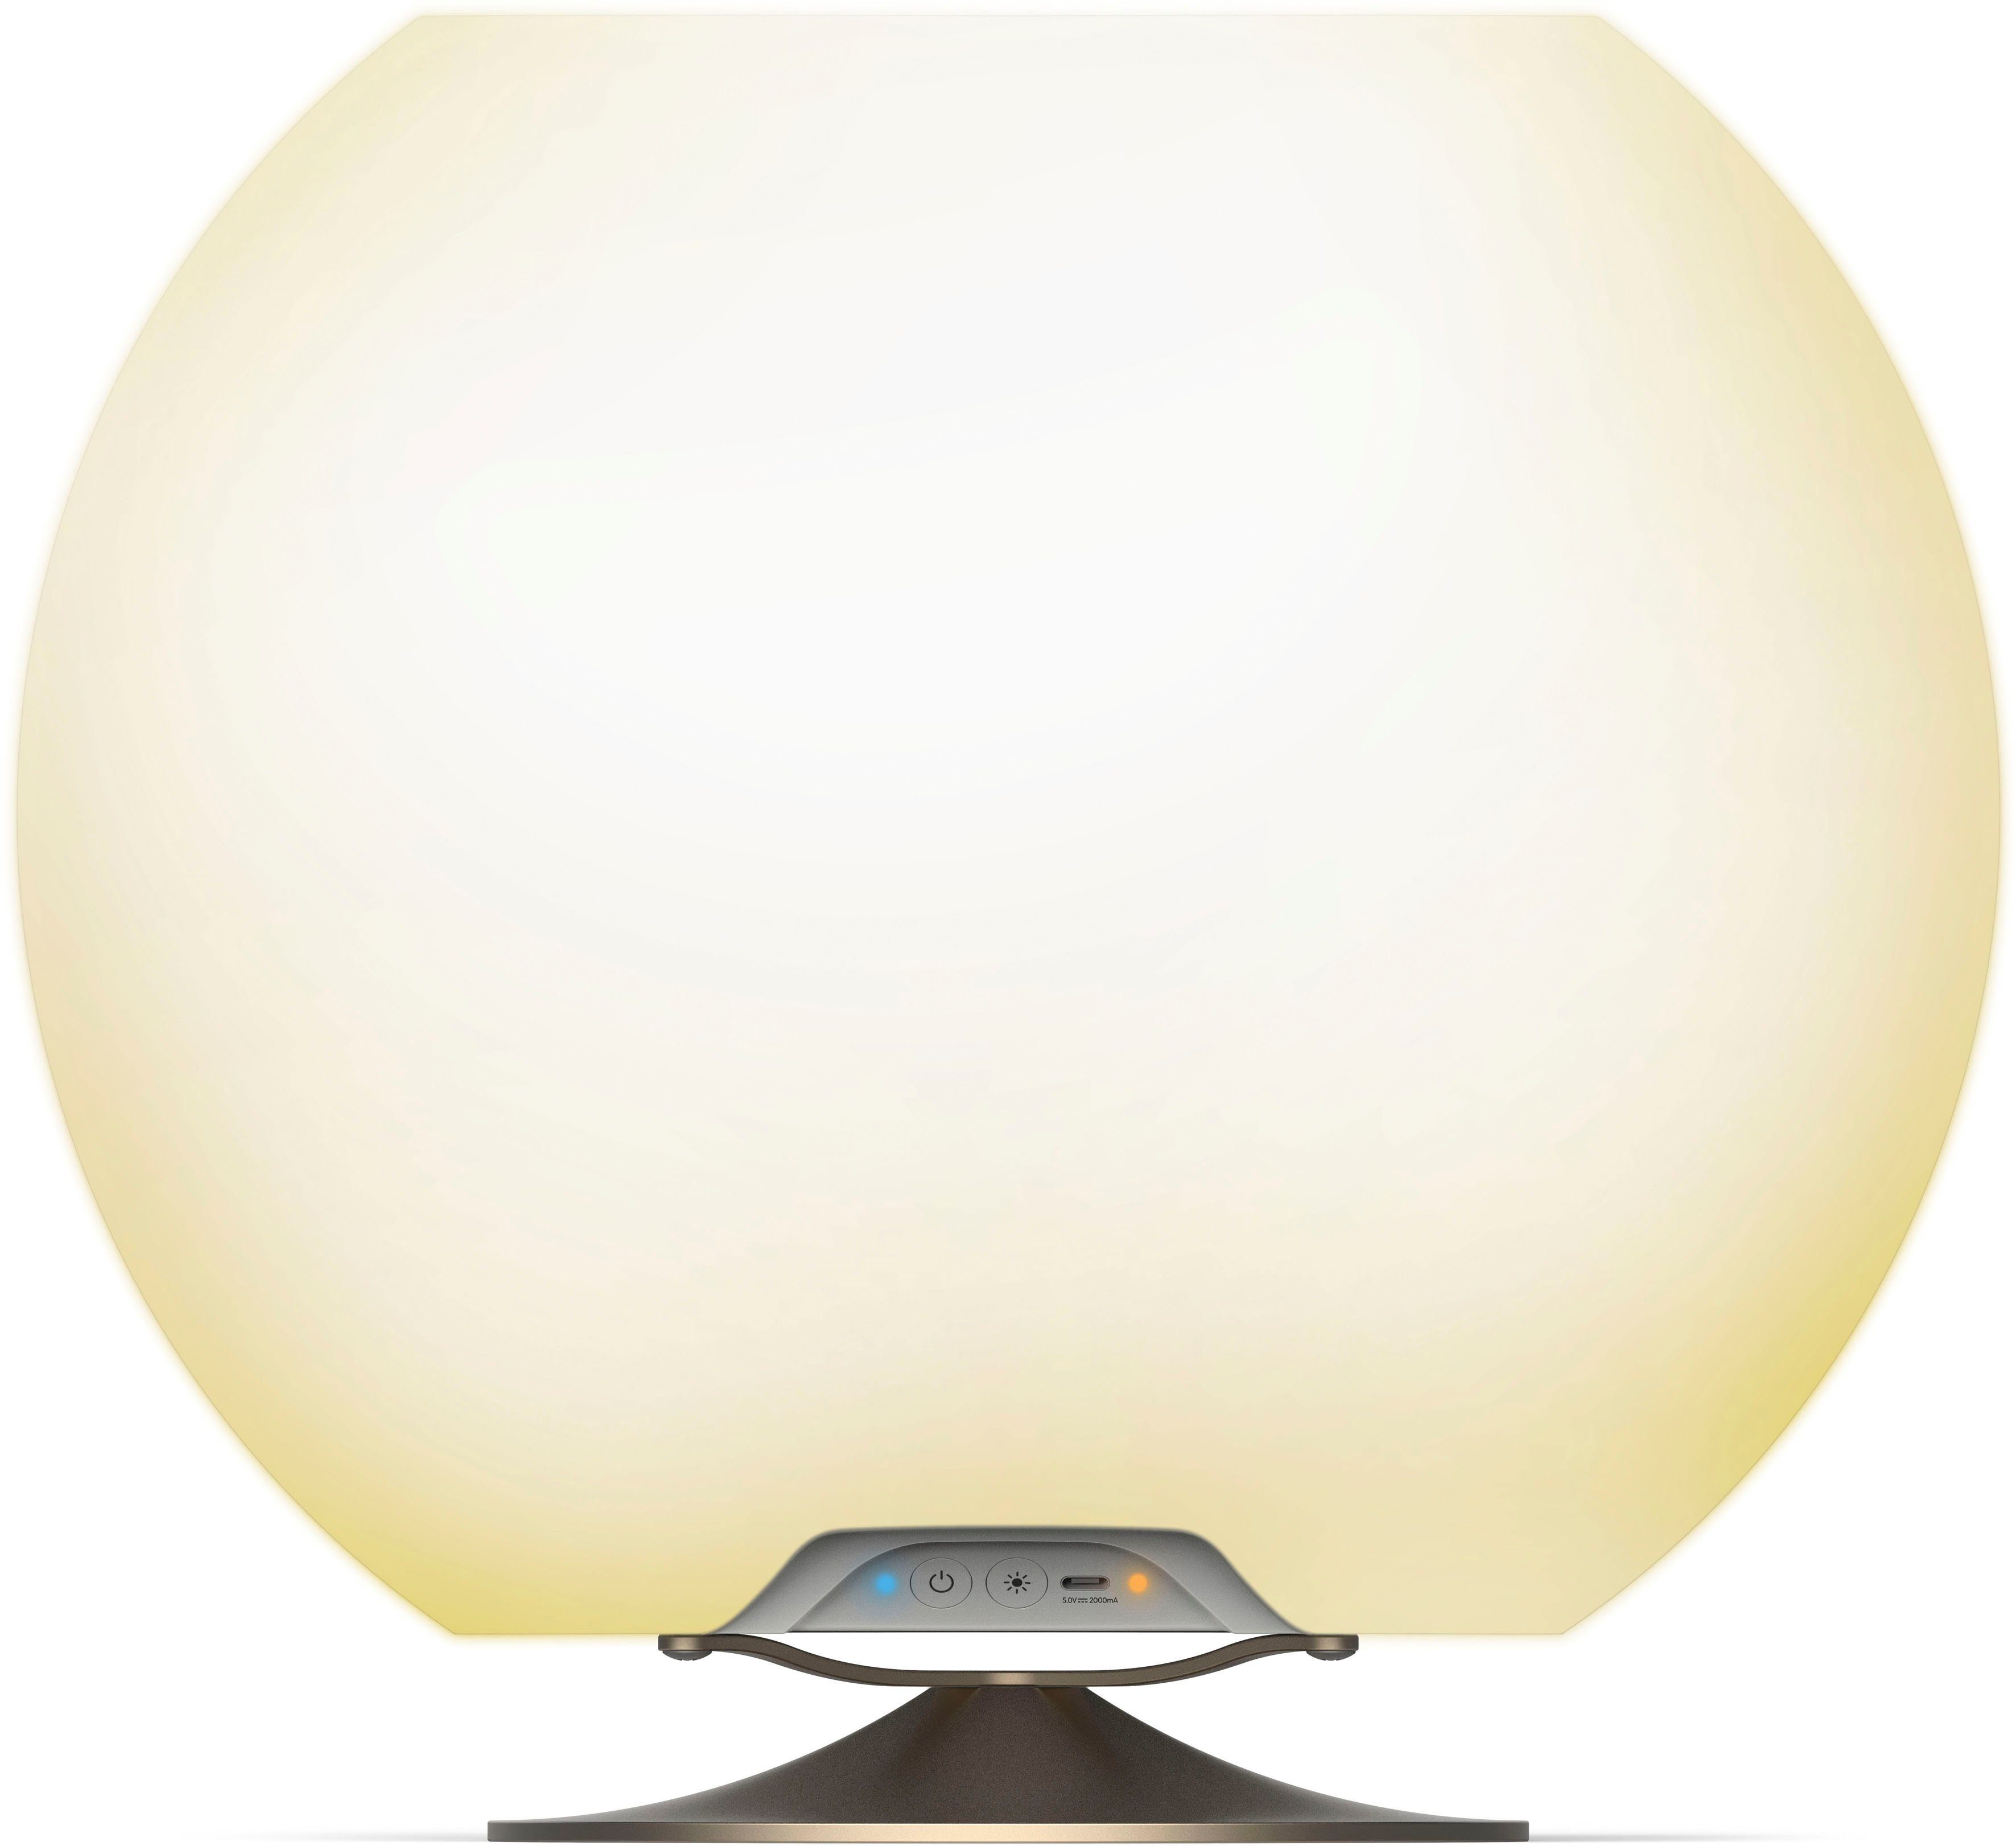 kooduu LED Tischleuchte Sphere, Bluetooth-Lautsprecher, LED fest integriert, Warmweiß, Sekt-/Getränkekühler, Bluetooth Lautsprecher, koppelbar, TWS-Stereo